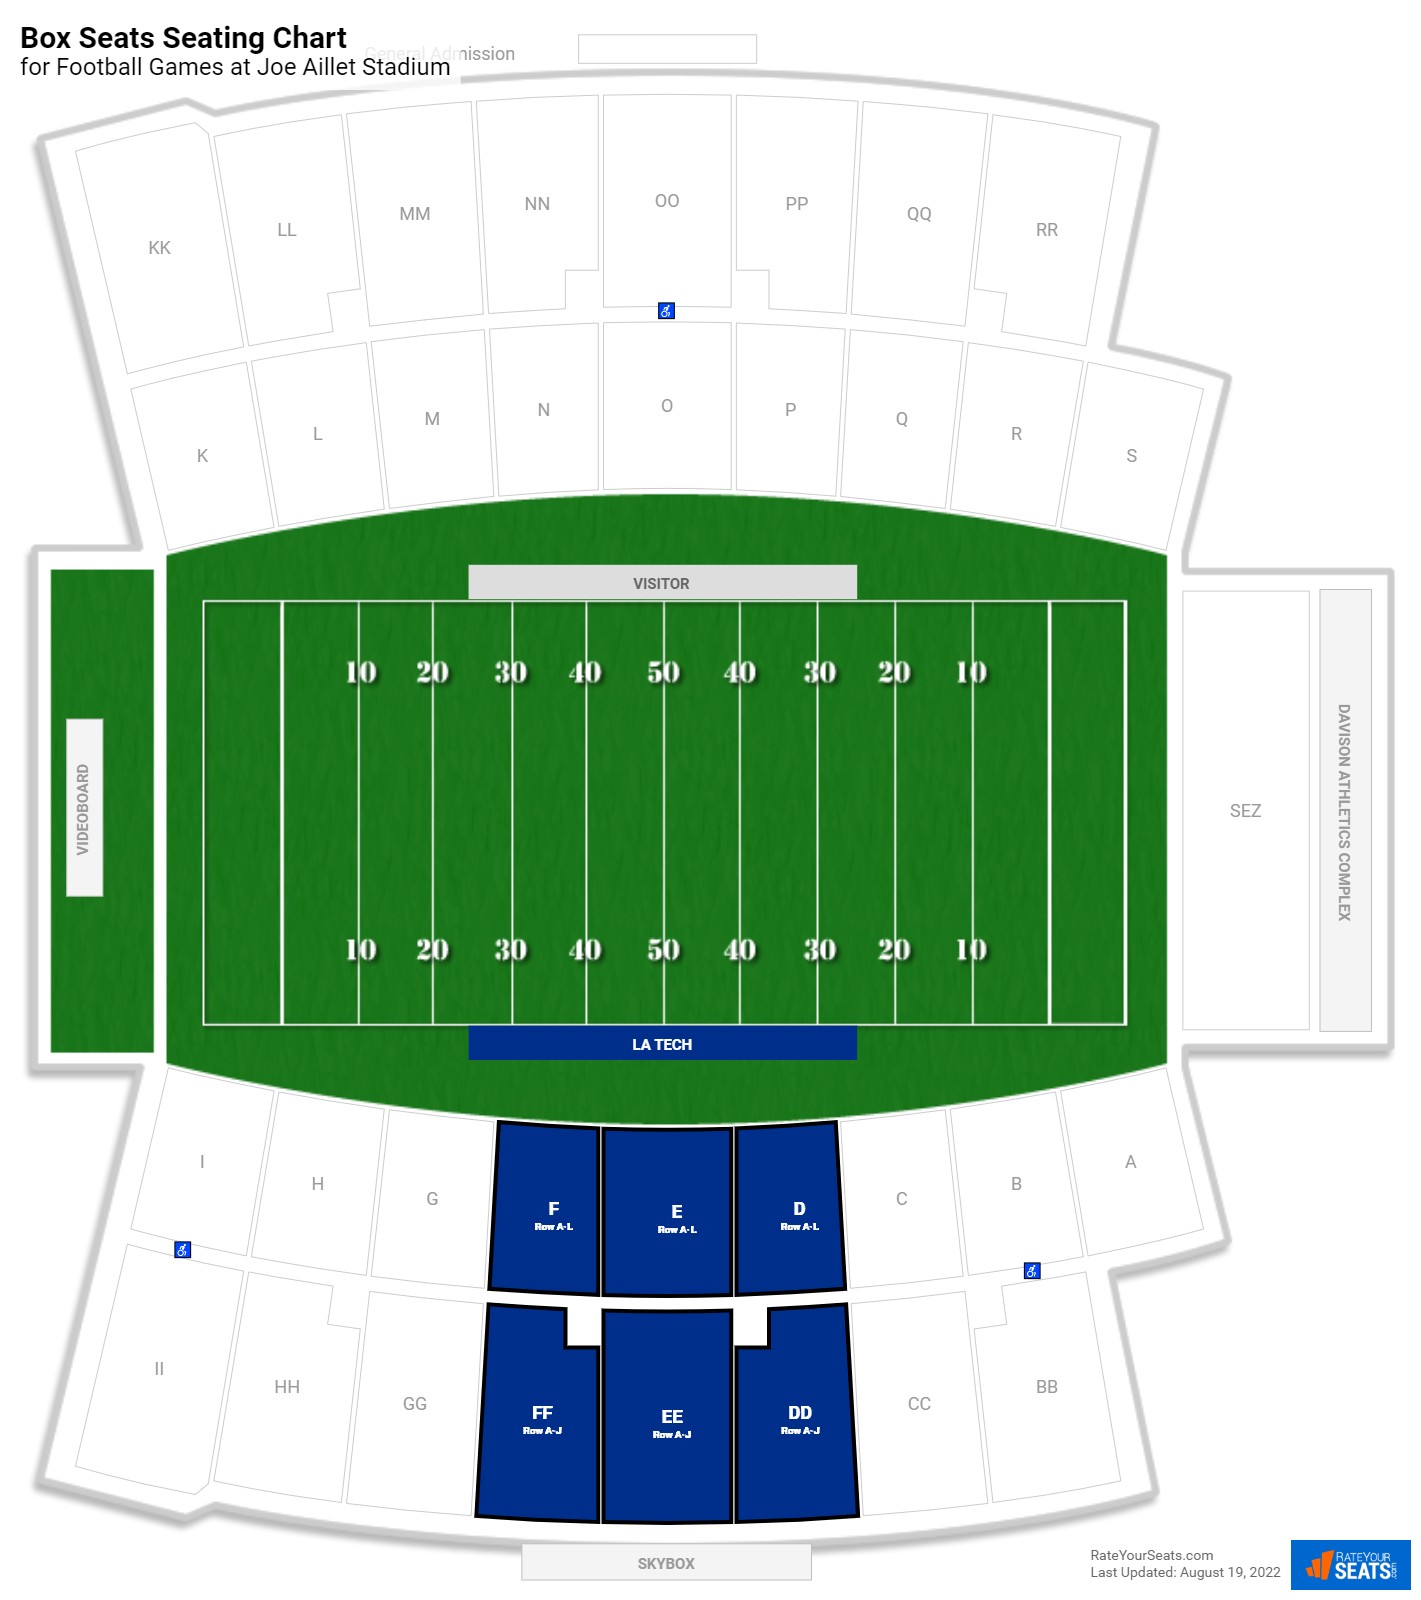 Joe Aillet Stadium Box Seats - RateYourSeats.com